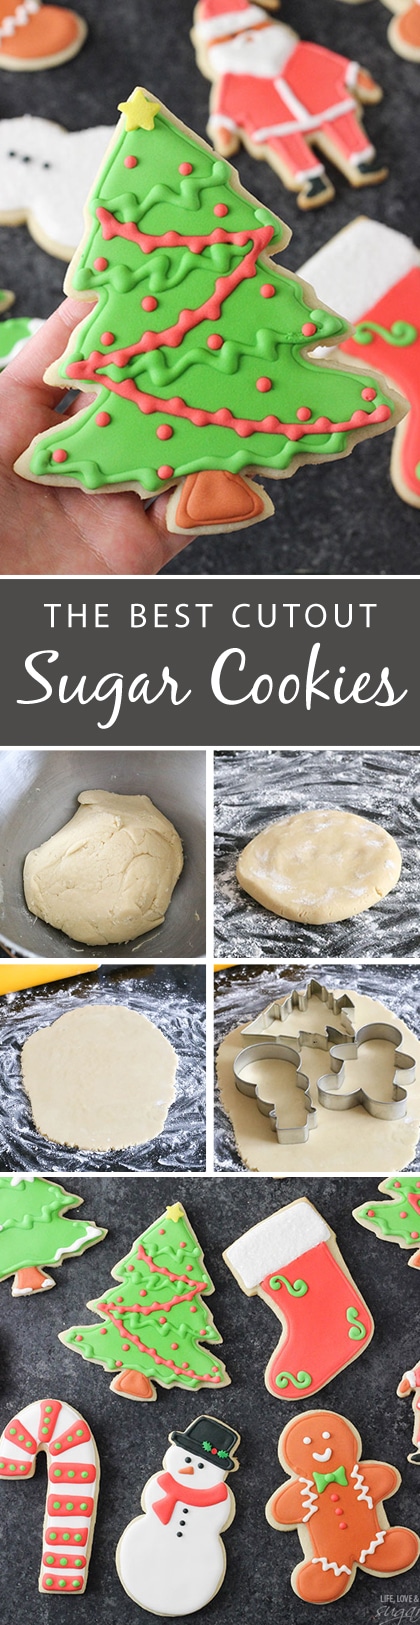 Cutout Sugar Cookies Collage